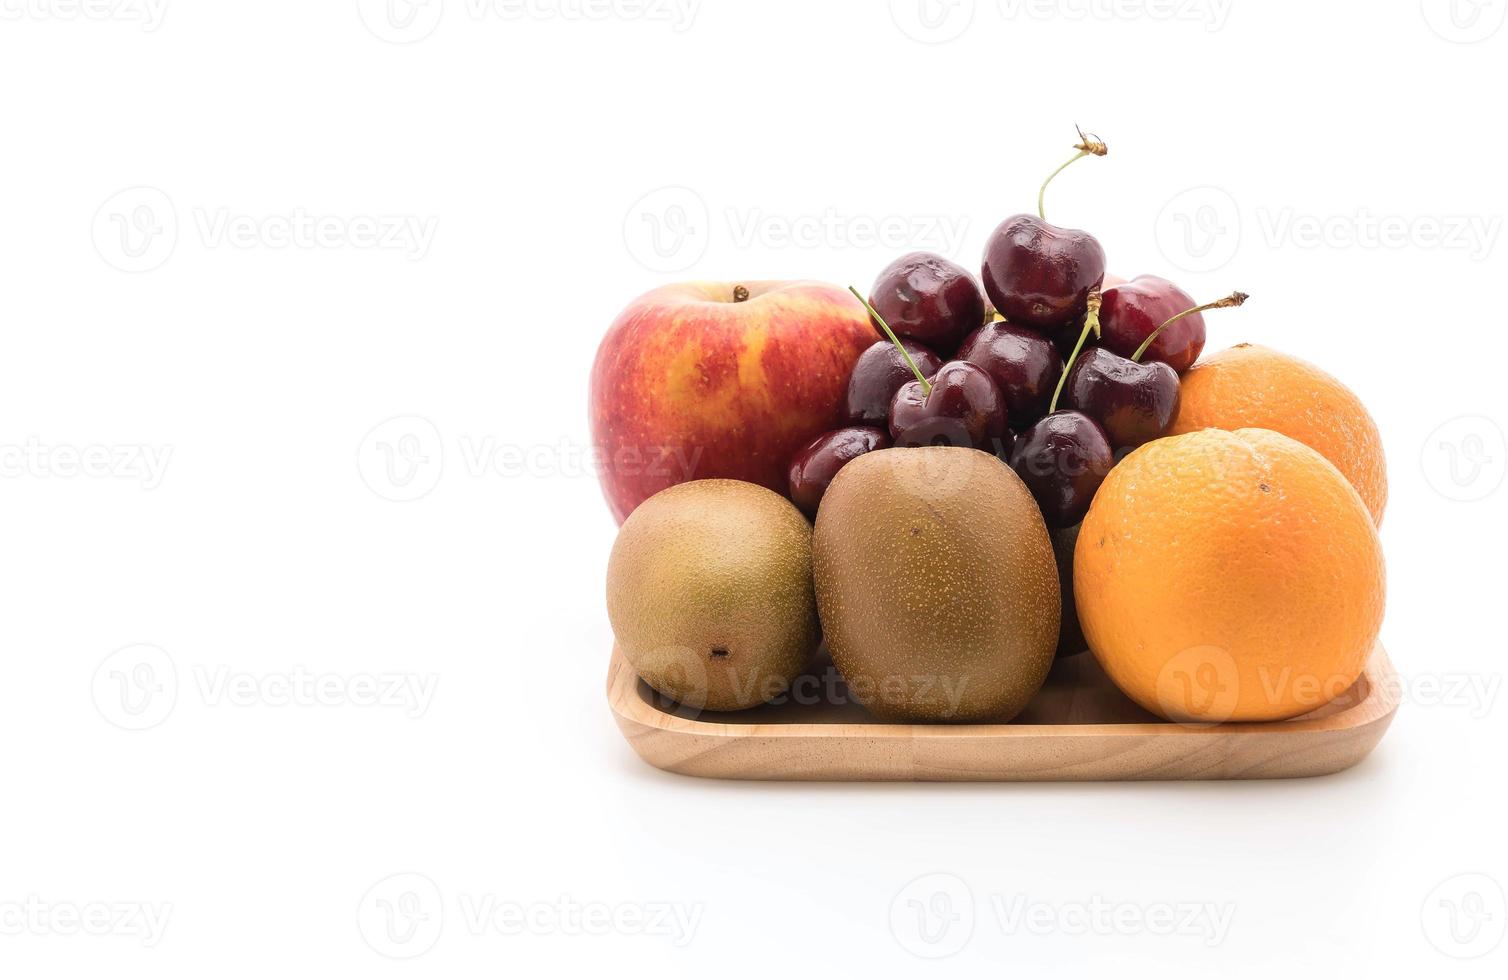 gemengd fruit in houten plaat op witte achtergrond foto